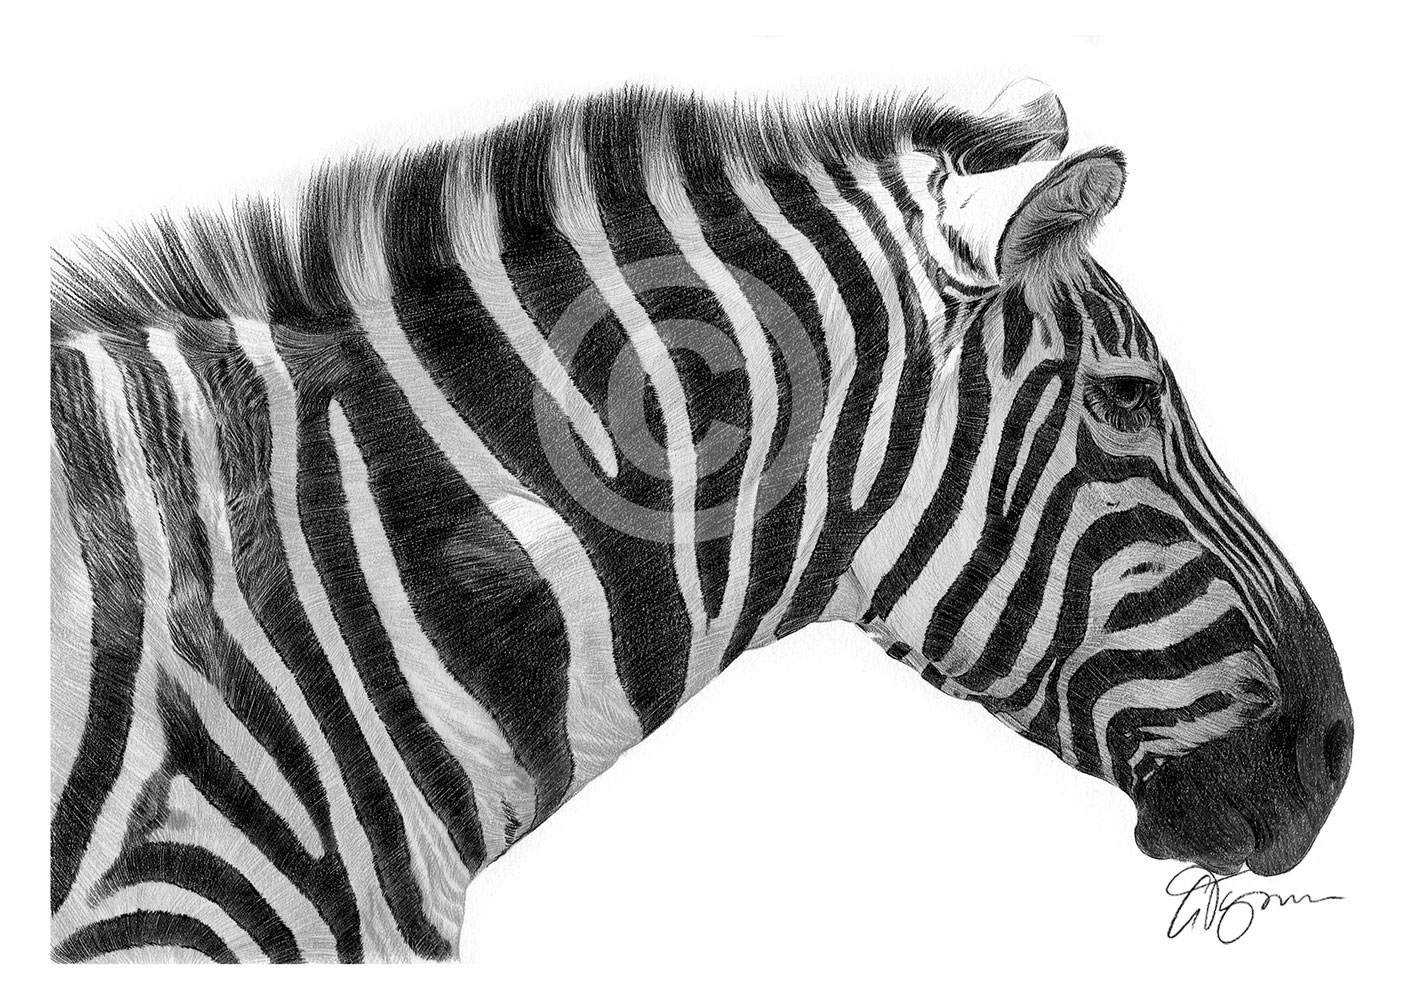 Pencil drawing of an African zebra by artist Gary Tymon